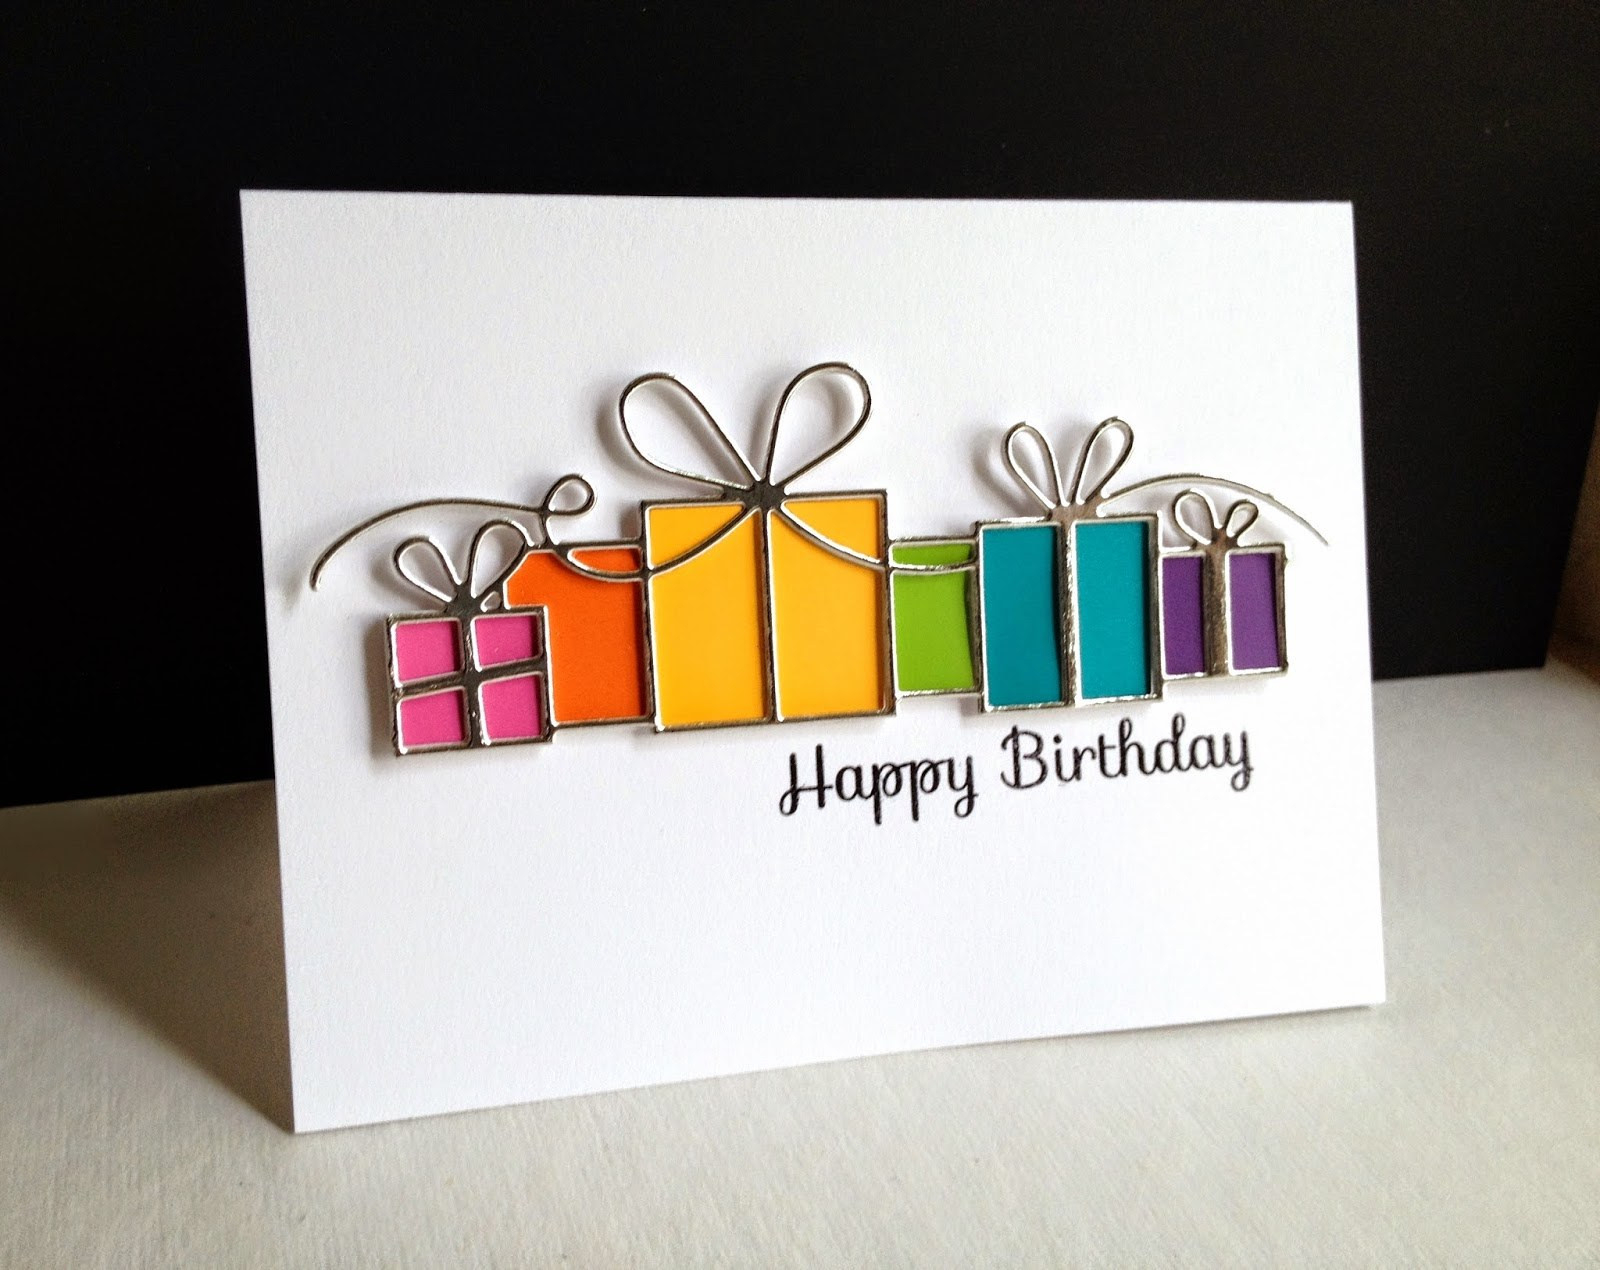 Handmade Greeting Cards For Birthday Ideas Handmade Birthday Card Ideas Unique Handmade Greeting Cards Choice